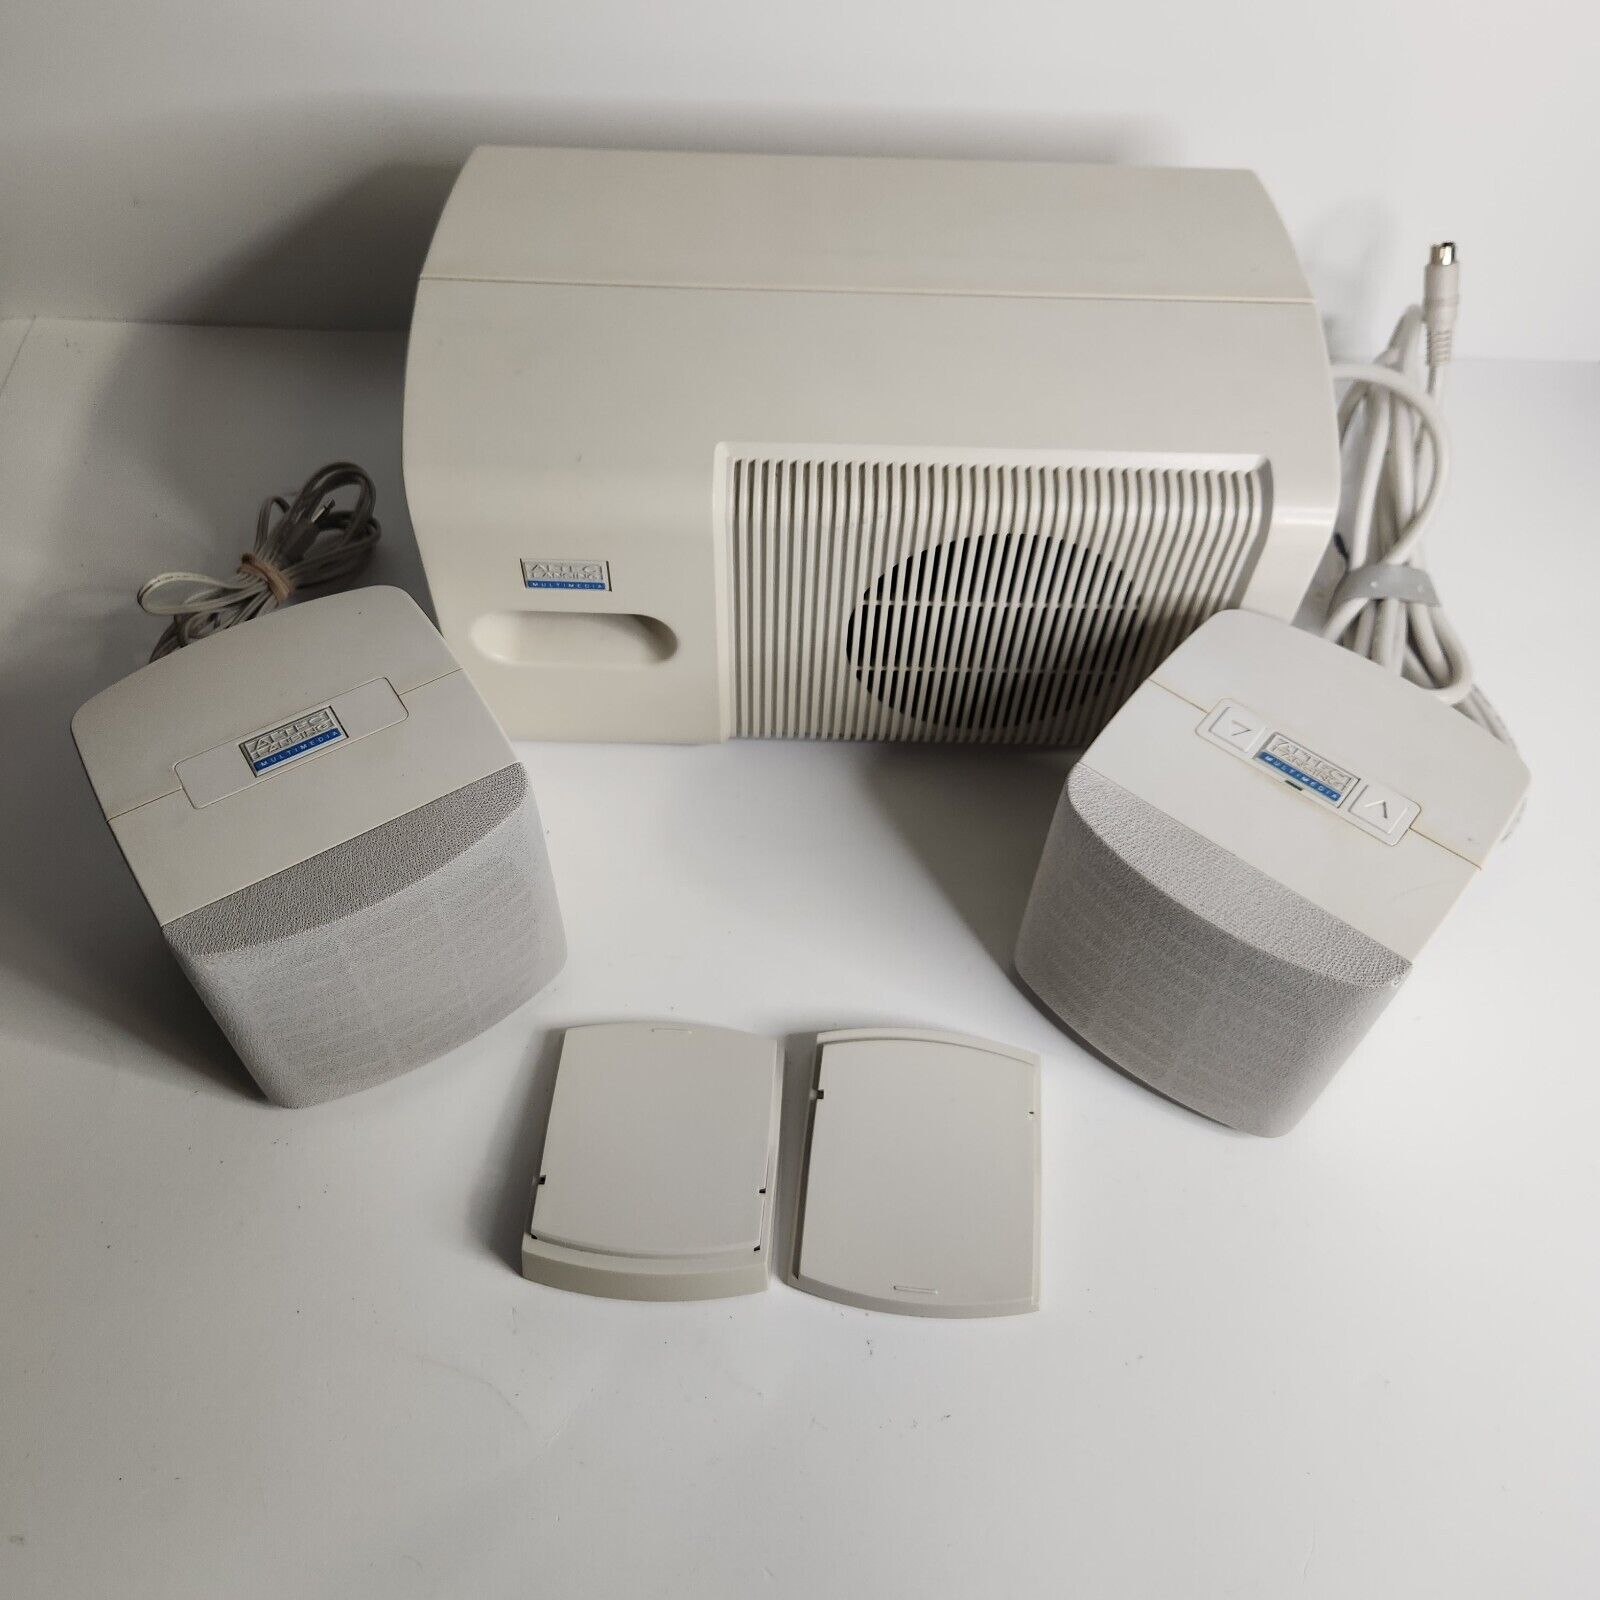 Altec Lansing ACS45 Multimedia Computer Speaker System: Subwoofer & 2 Speakers